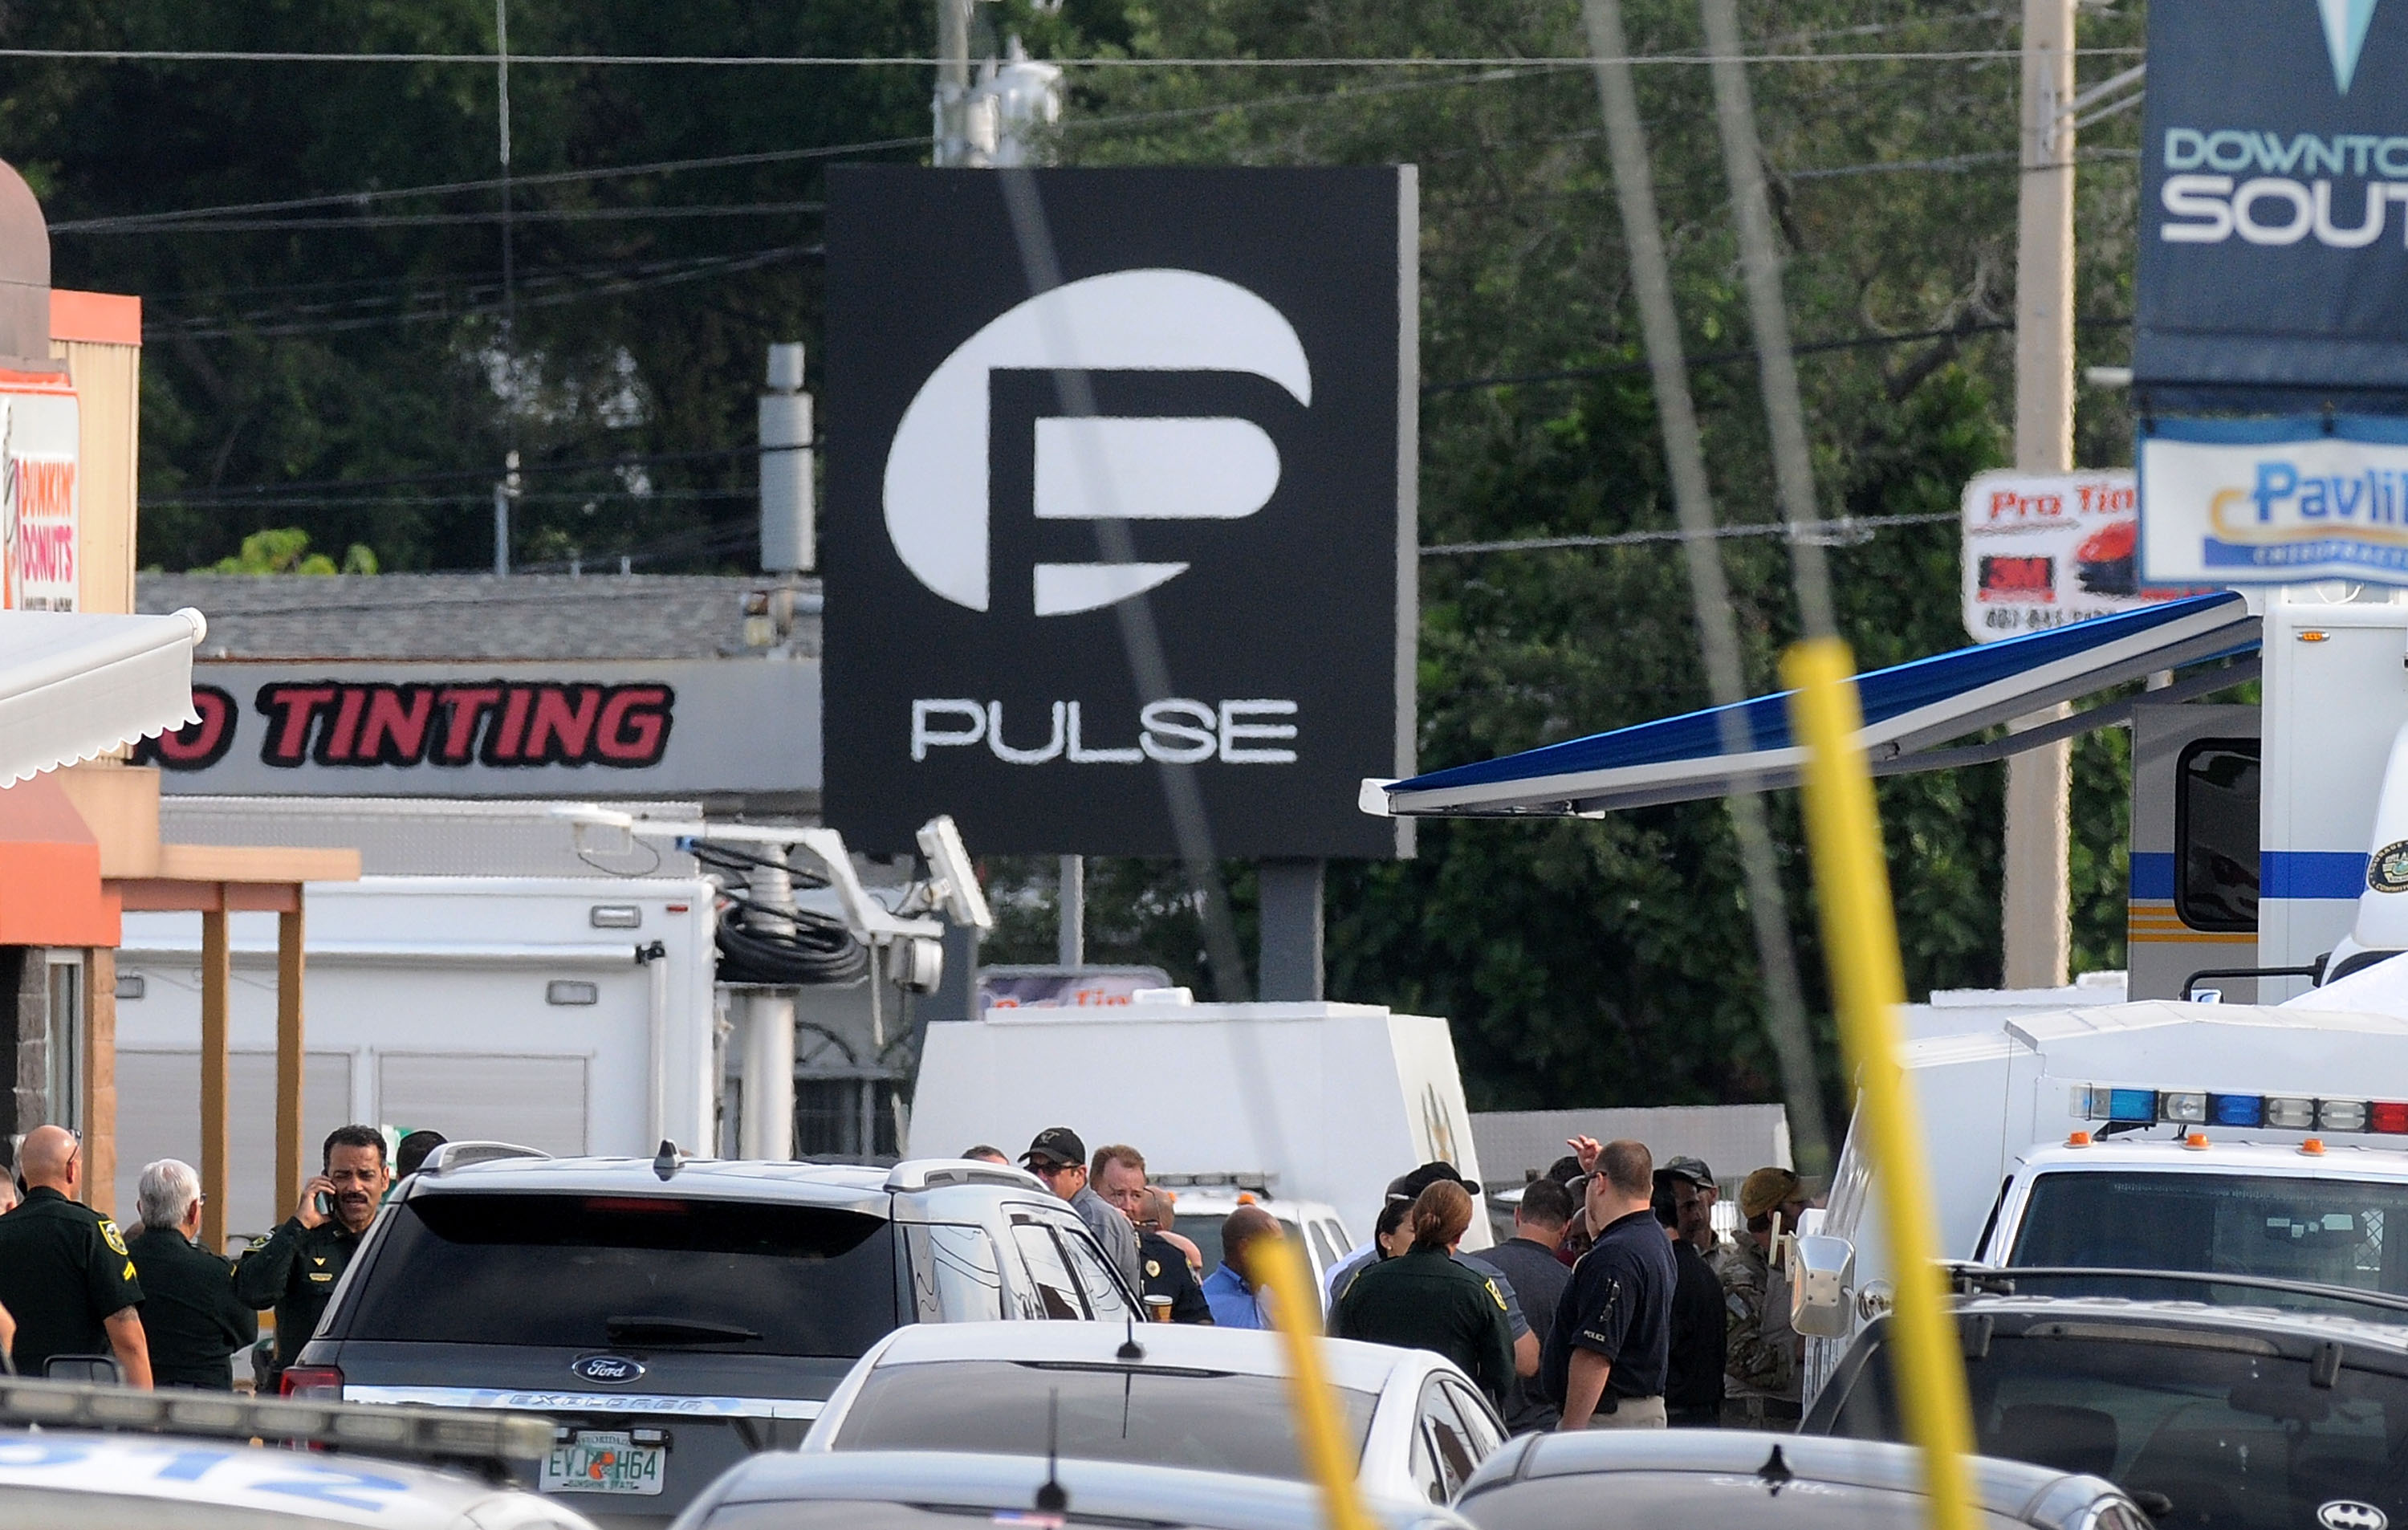 Blutbad in Schwulenclub in Orlando: 50 Tote, 53 Verletzte – FBI ermittelt wegen Terror